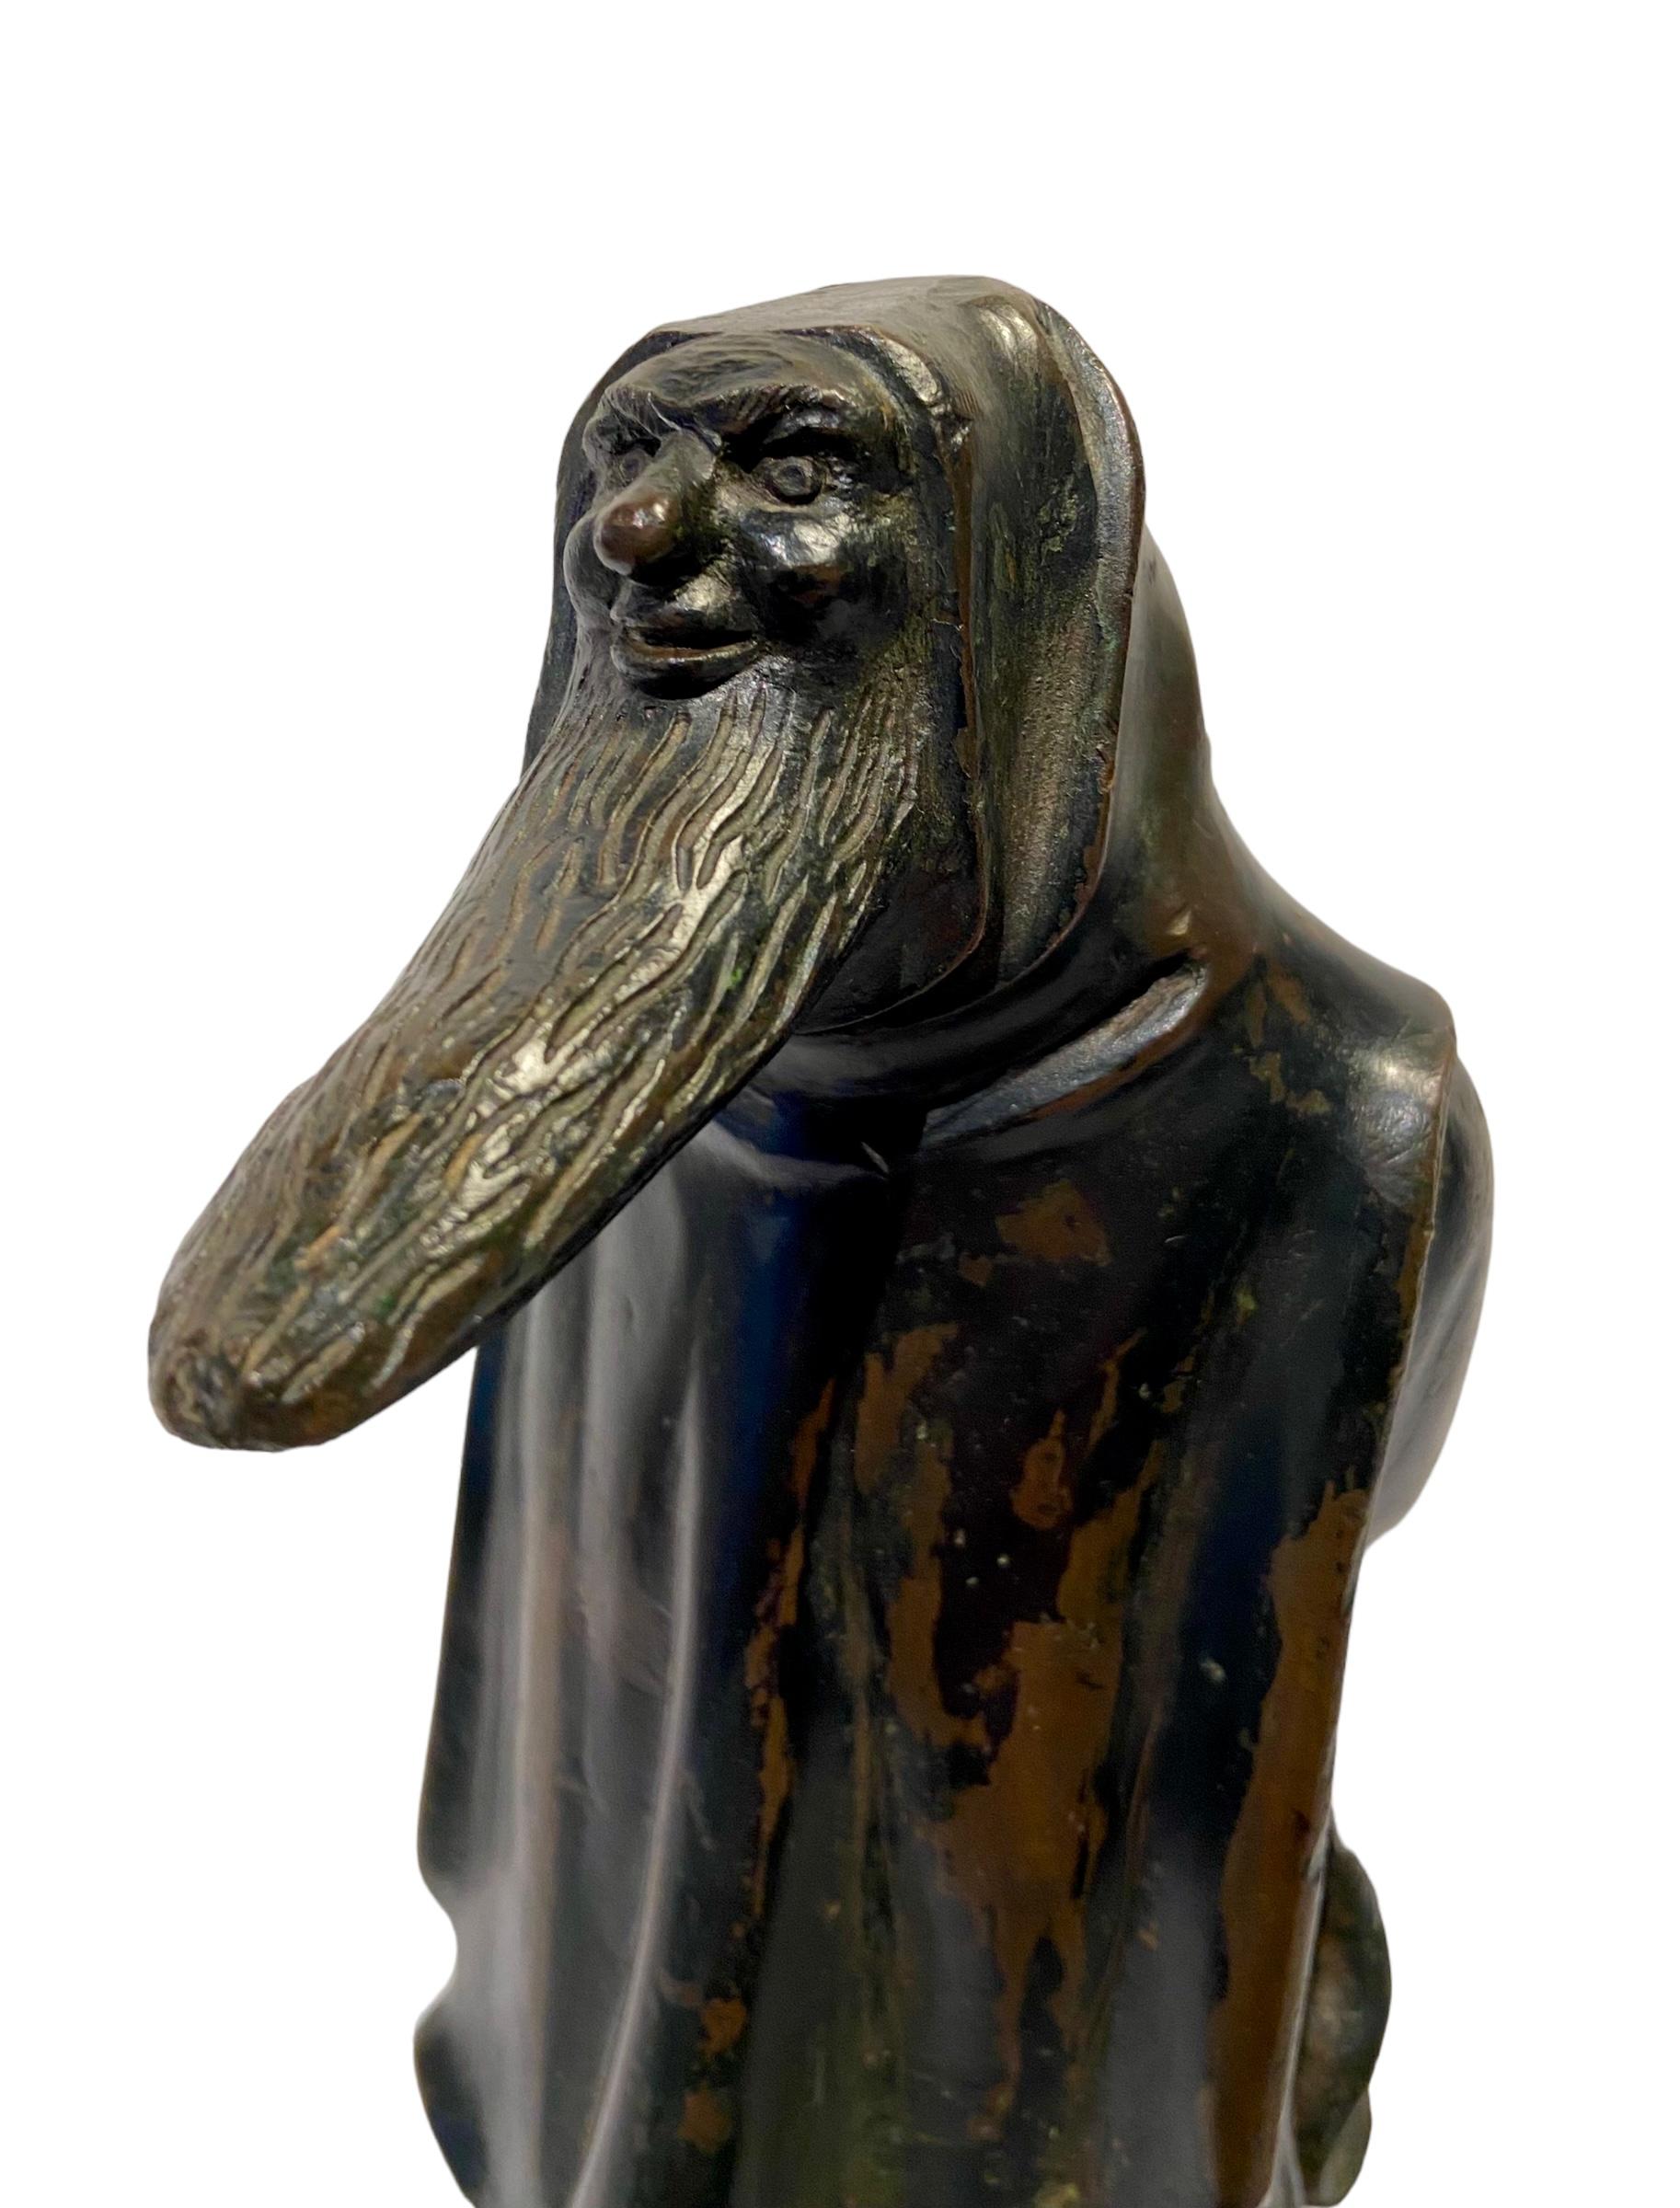 Folk Art Savage or folk story figure in bronze. For Sale